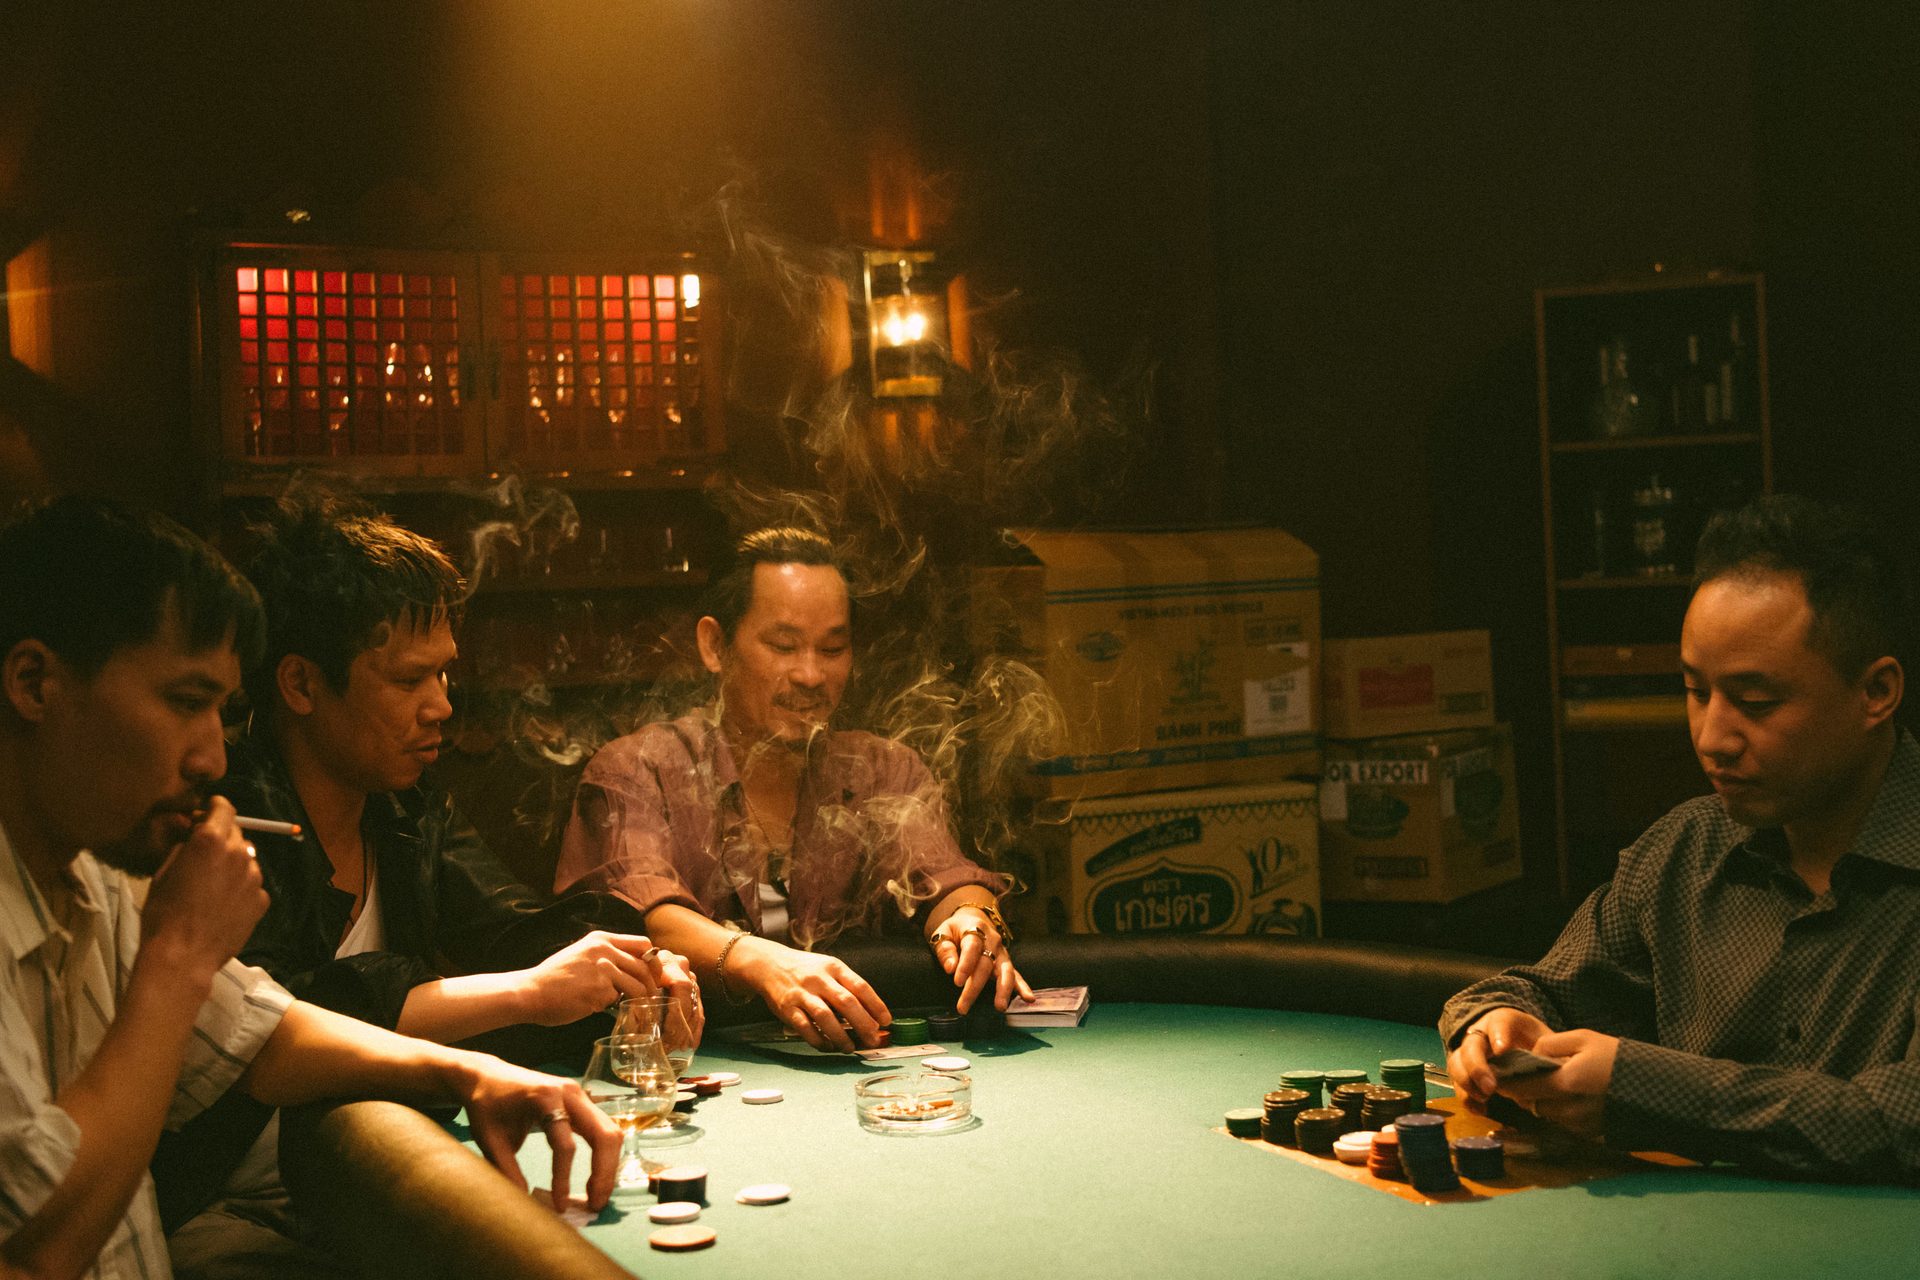 Poker table, Arm, Lighting, Baize, Interaction, Gambling, Sharing